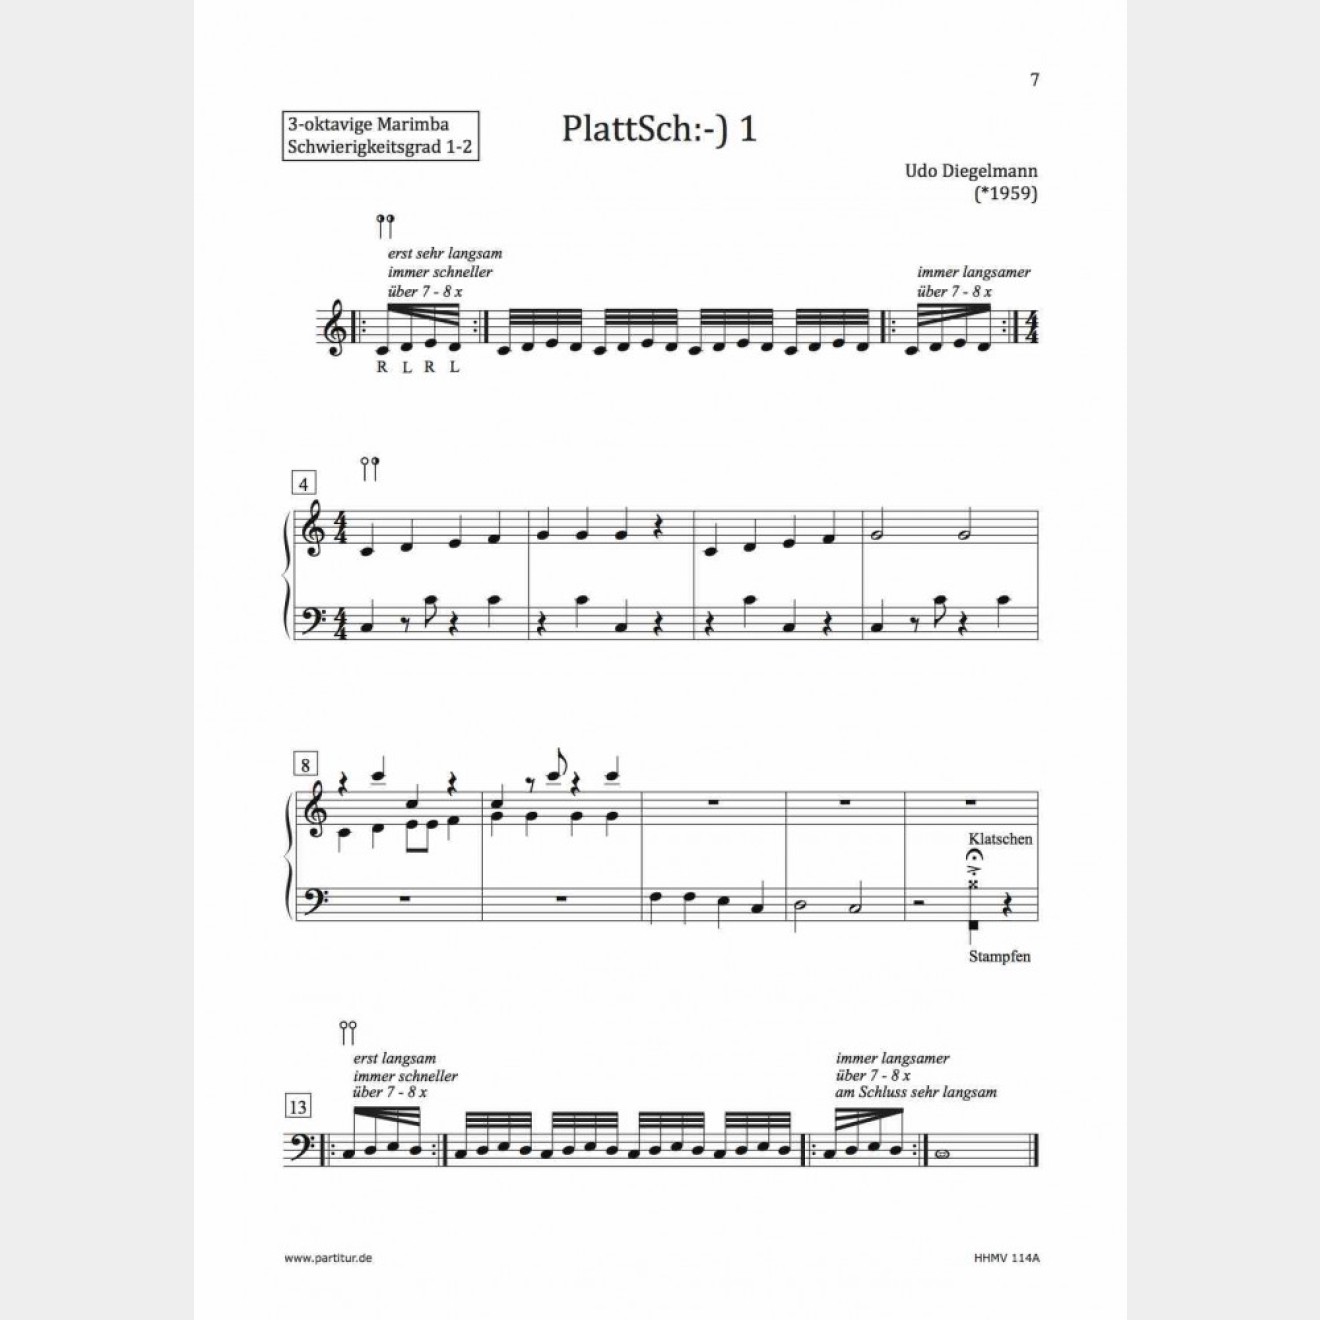 MarimbaSpiele; volume 1 - easy to moderate